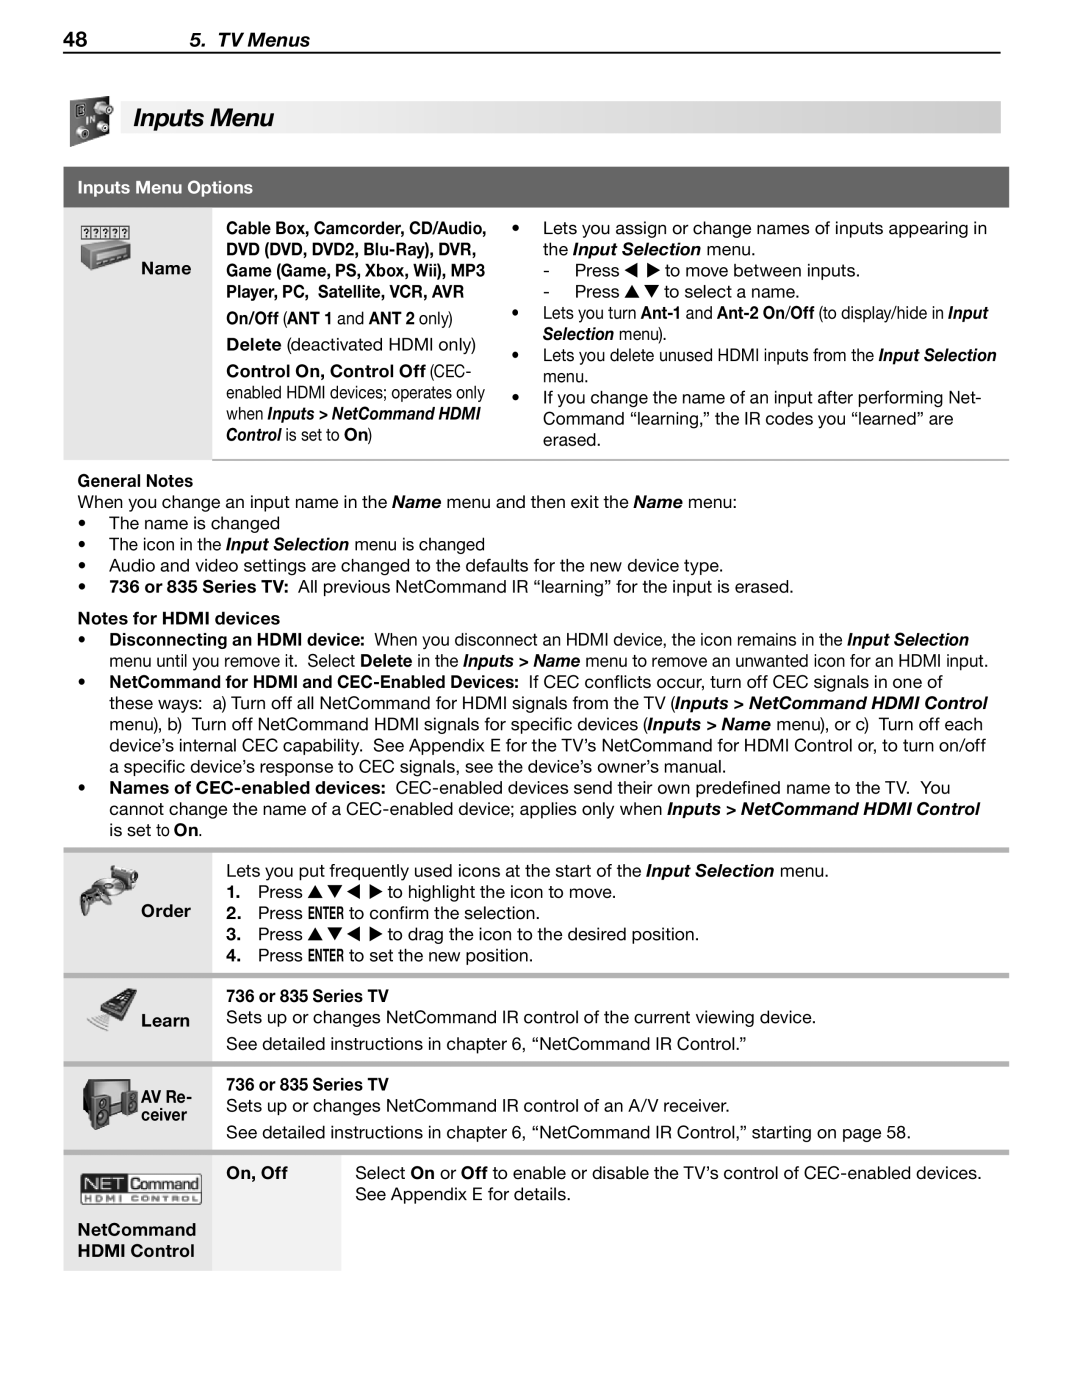 Mitsubishi Electronics WD-60C8 manual Inputs Menu Options, Selection menu, When Inputs NetCommand Hdmi 